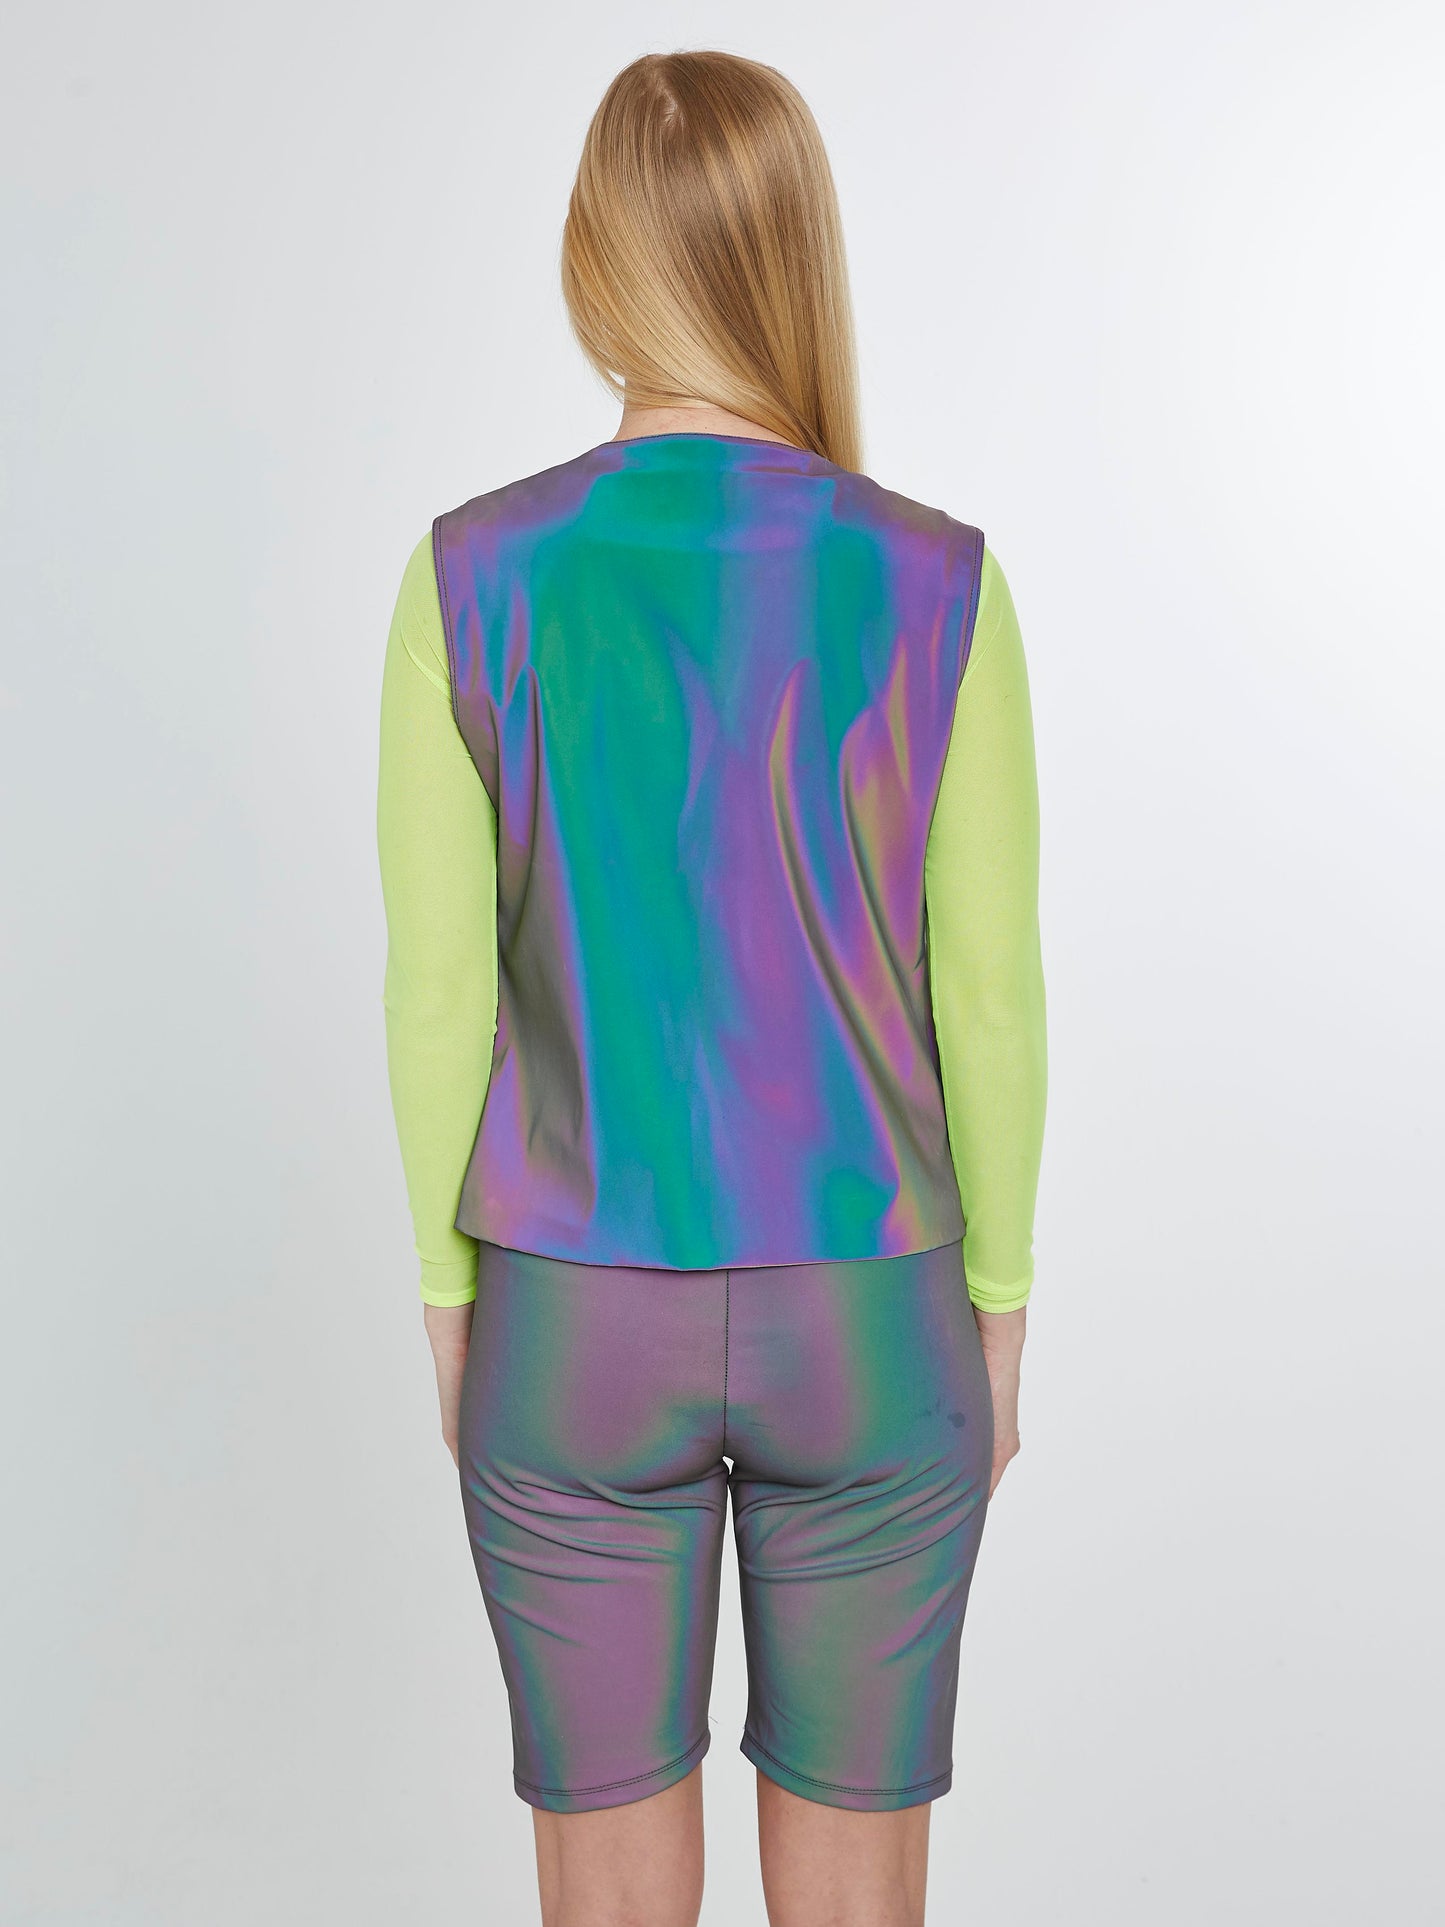 Rainbow reflective utility vest